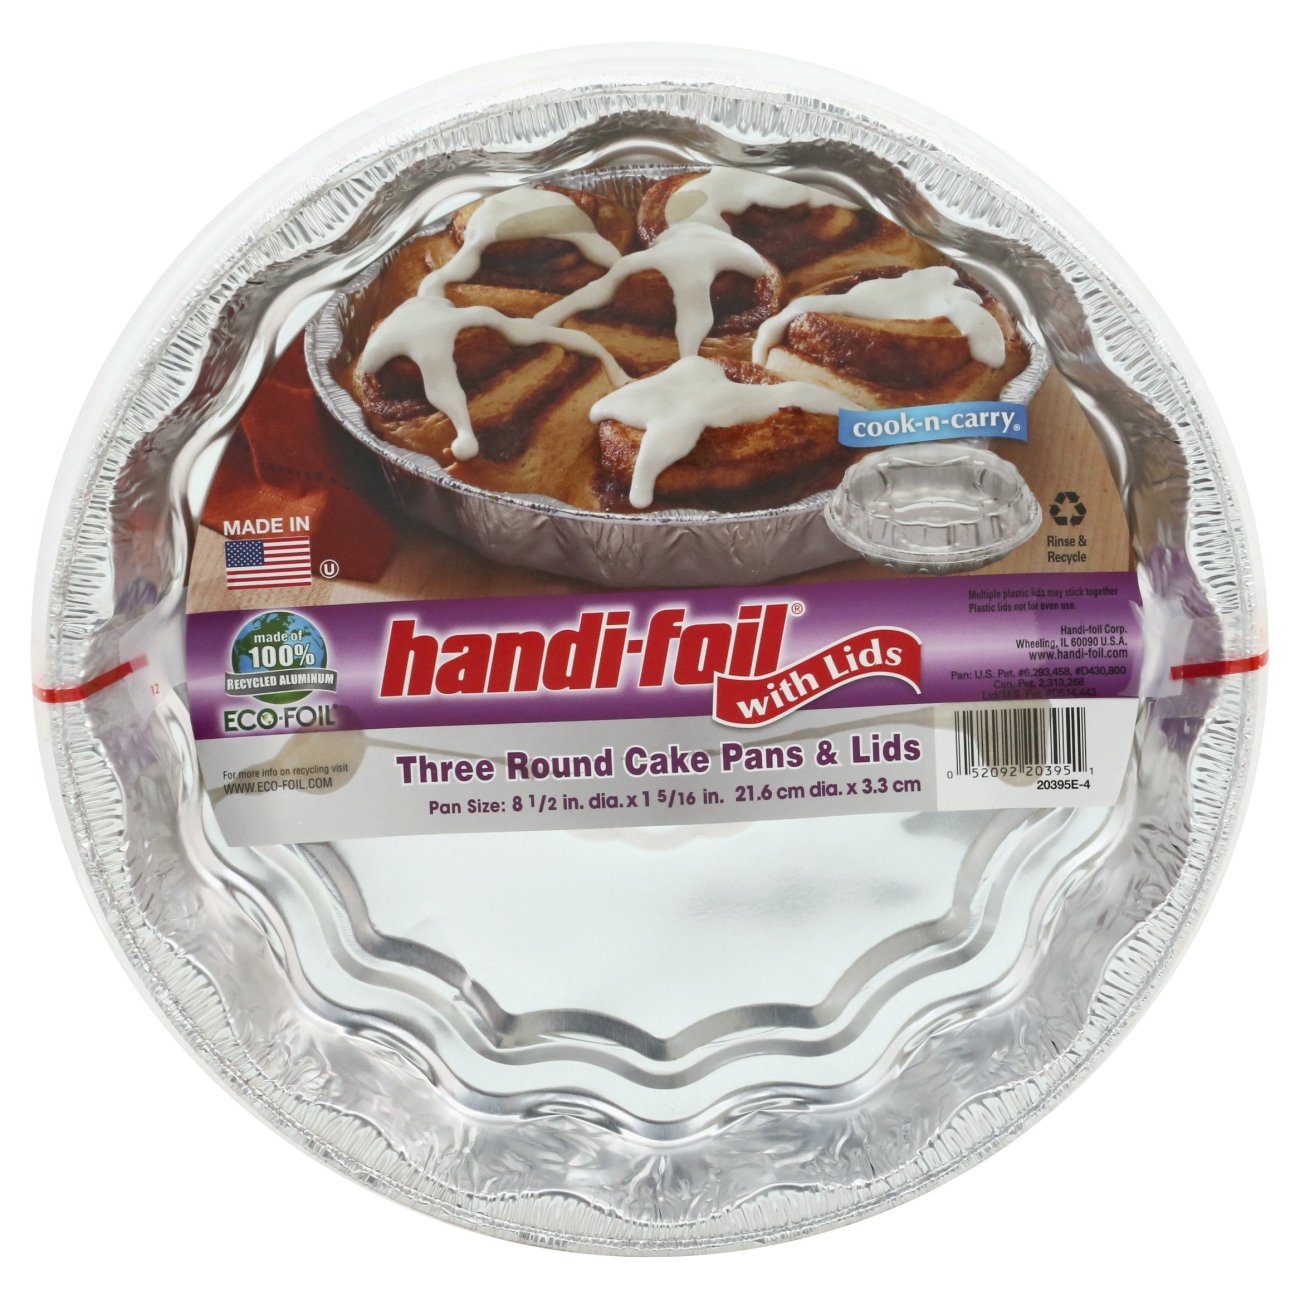 Handi-Foil Ultimates Cook-n-Carry Round Cake Pans & Lids - Shop Bakeware at  H-E-B